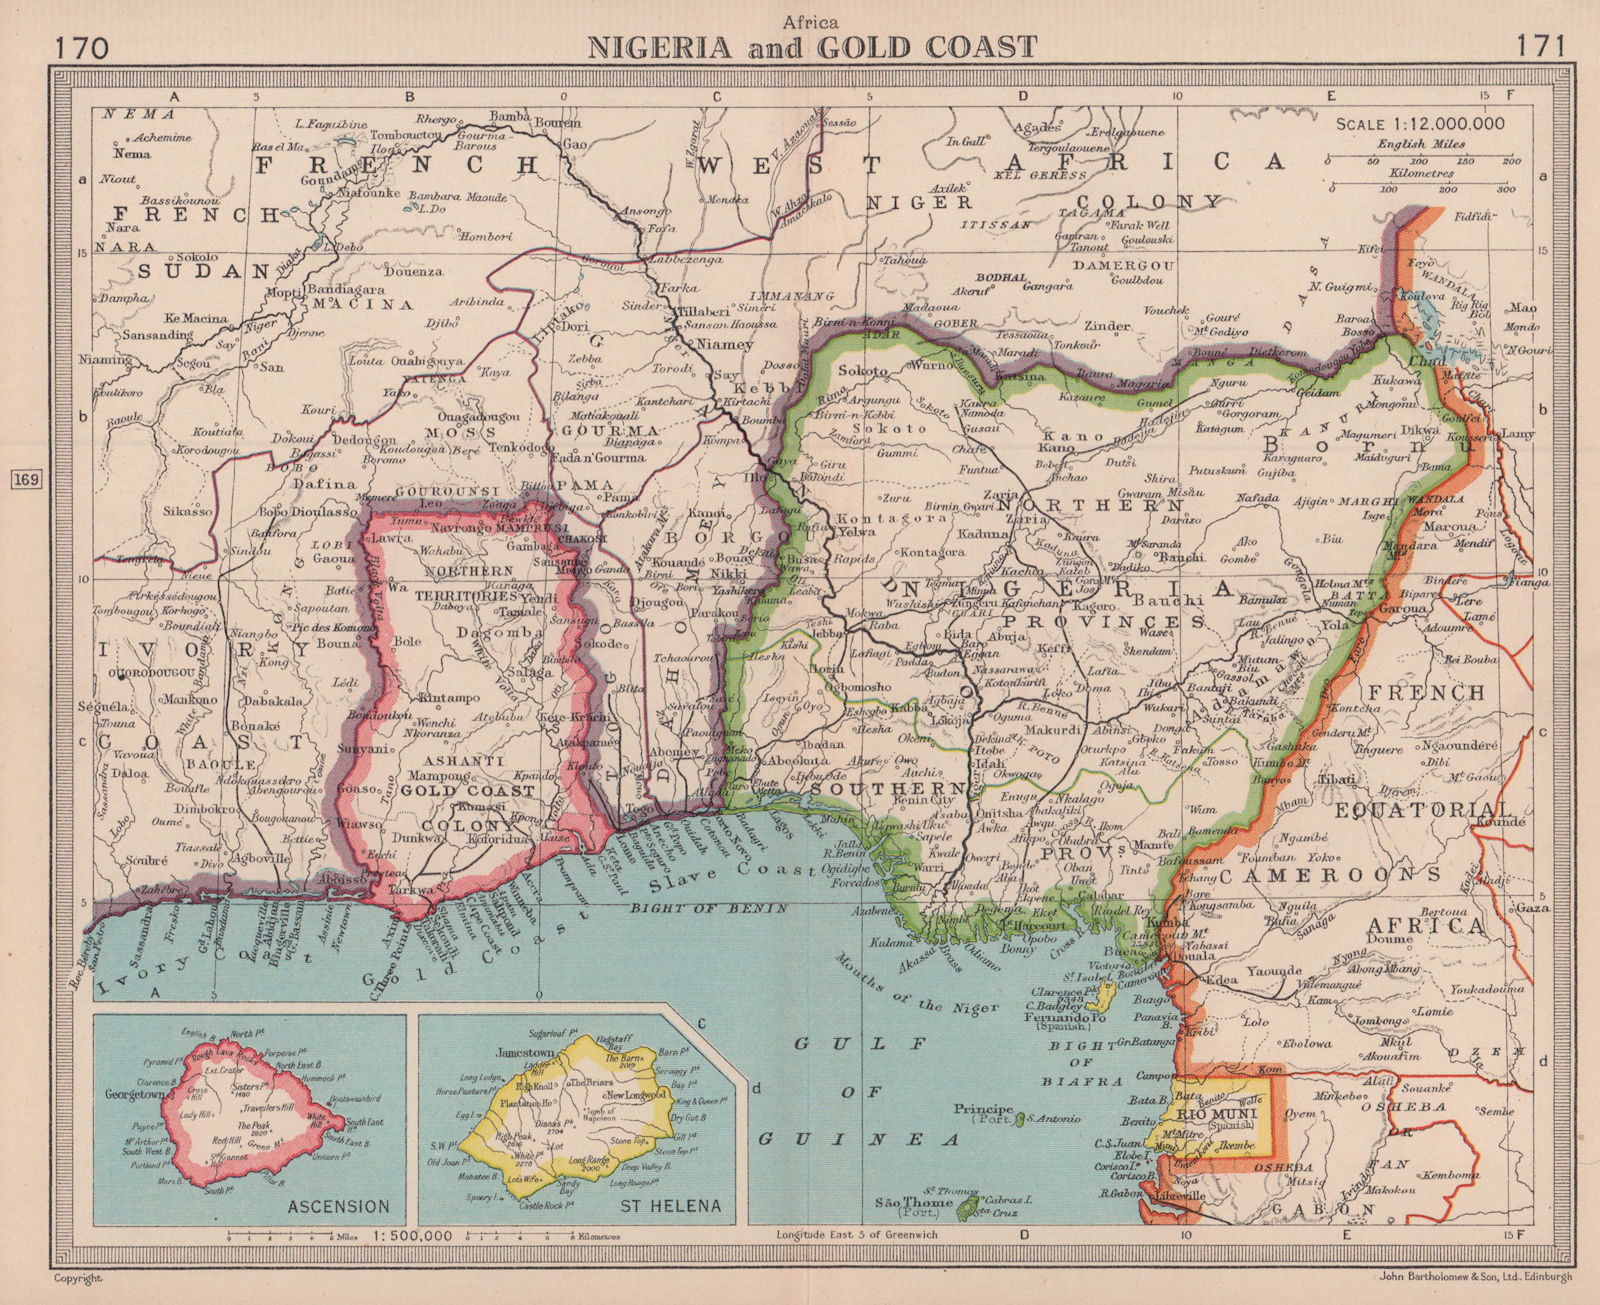 Nigeria & Gold Coast. Ghana. Ascension Island. St. Helena. Rio Muni 1949 map